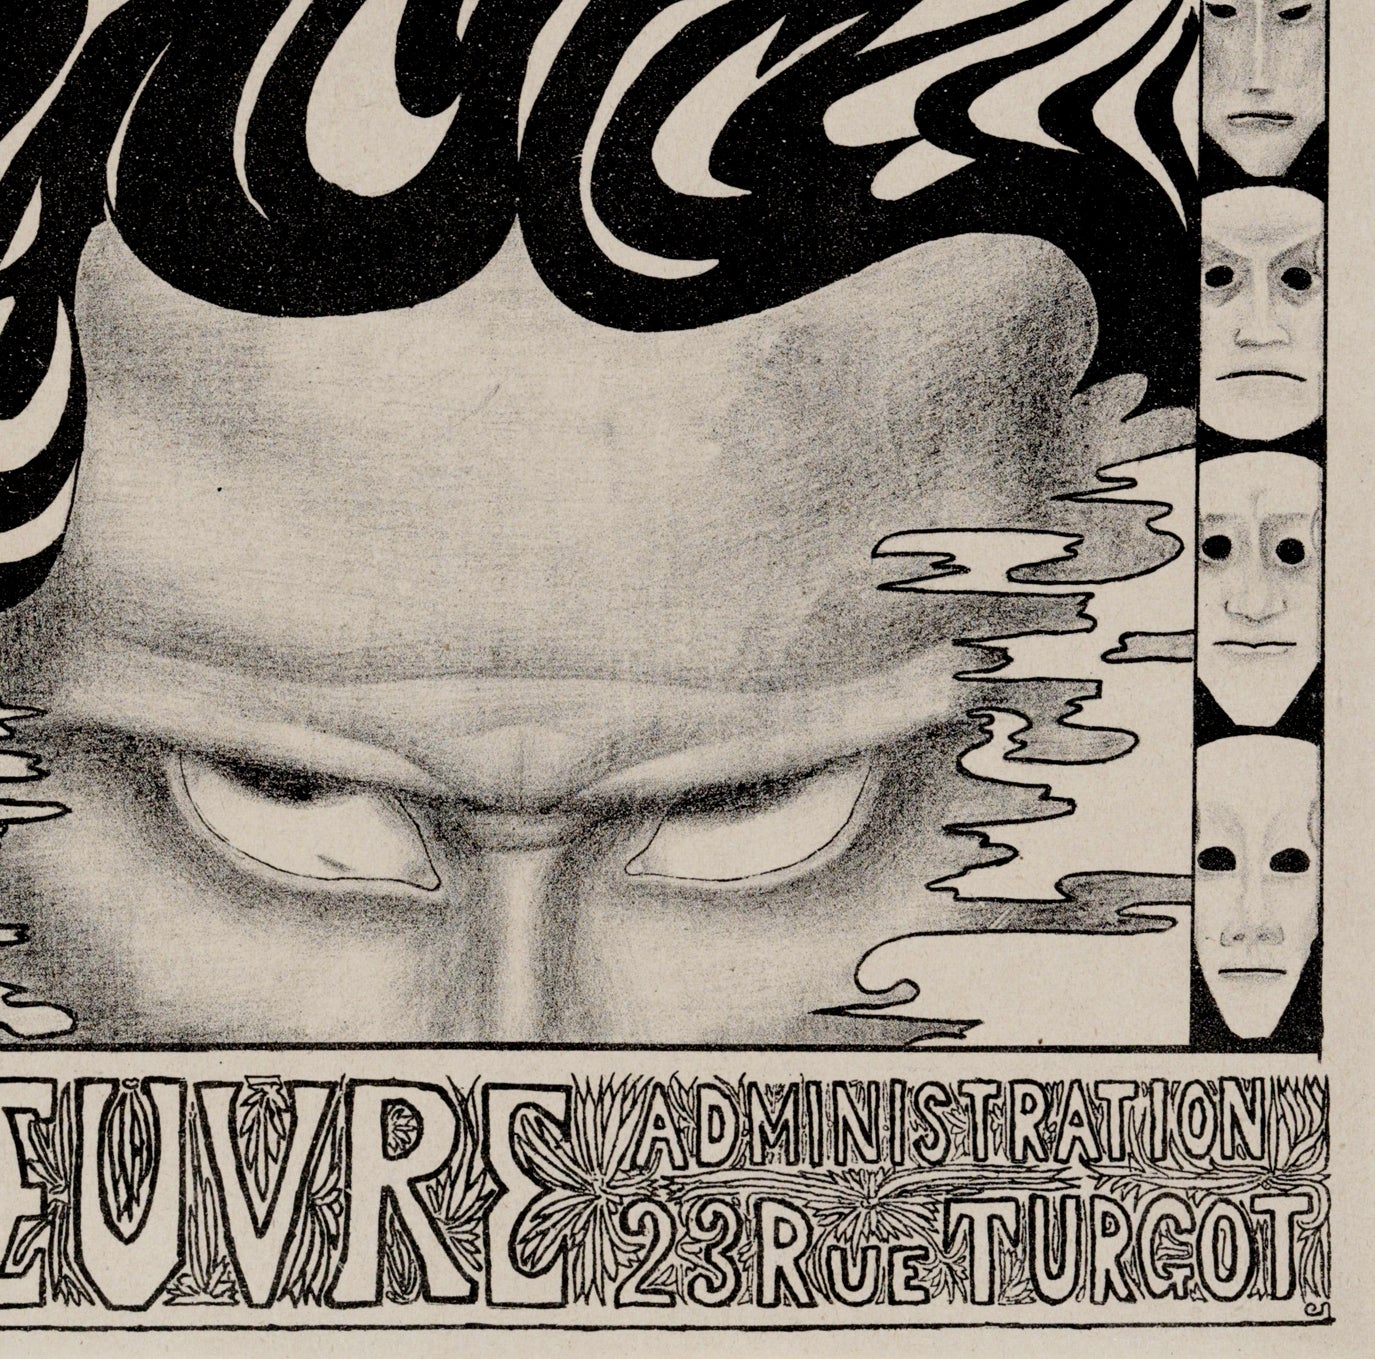 Vénise Sauvée Vintage Theater Program Reproduction Poster by Jan Toorop